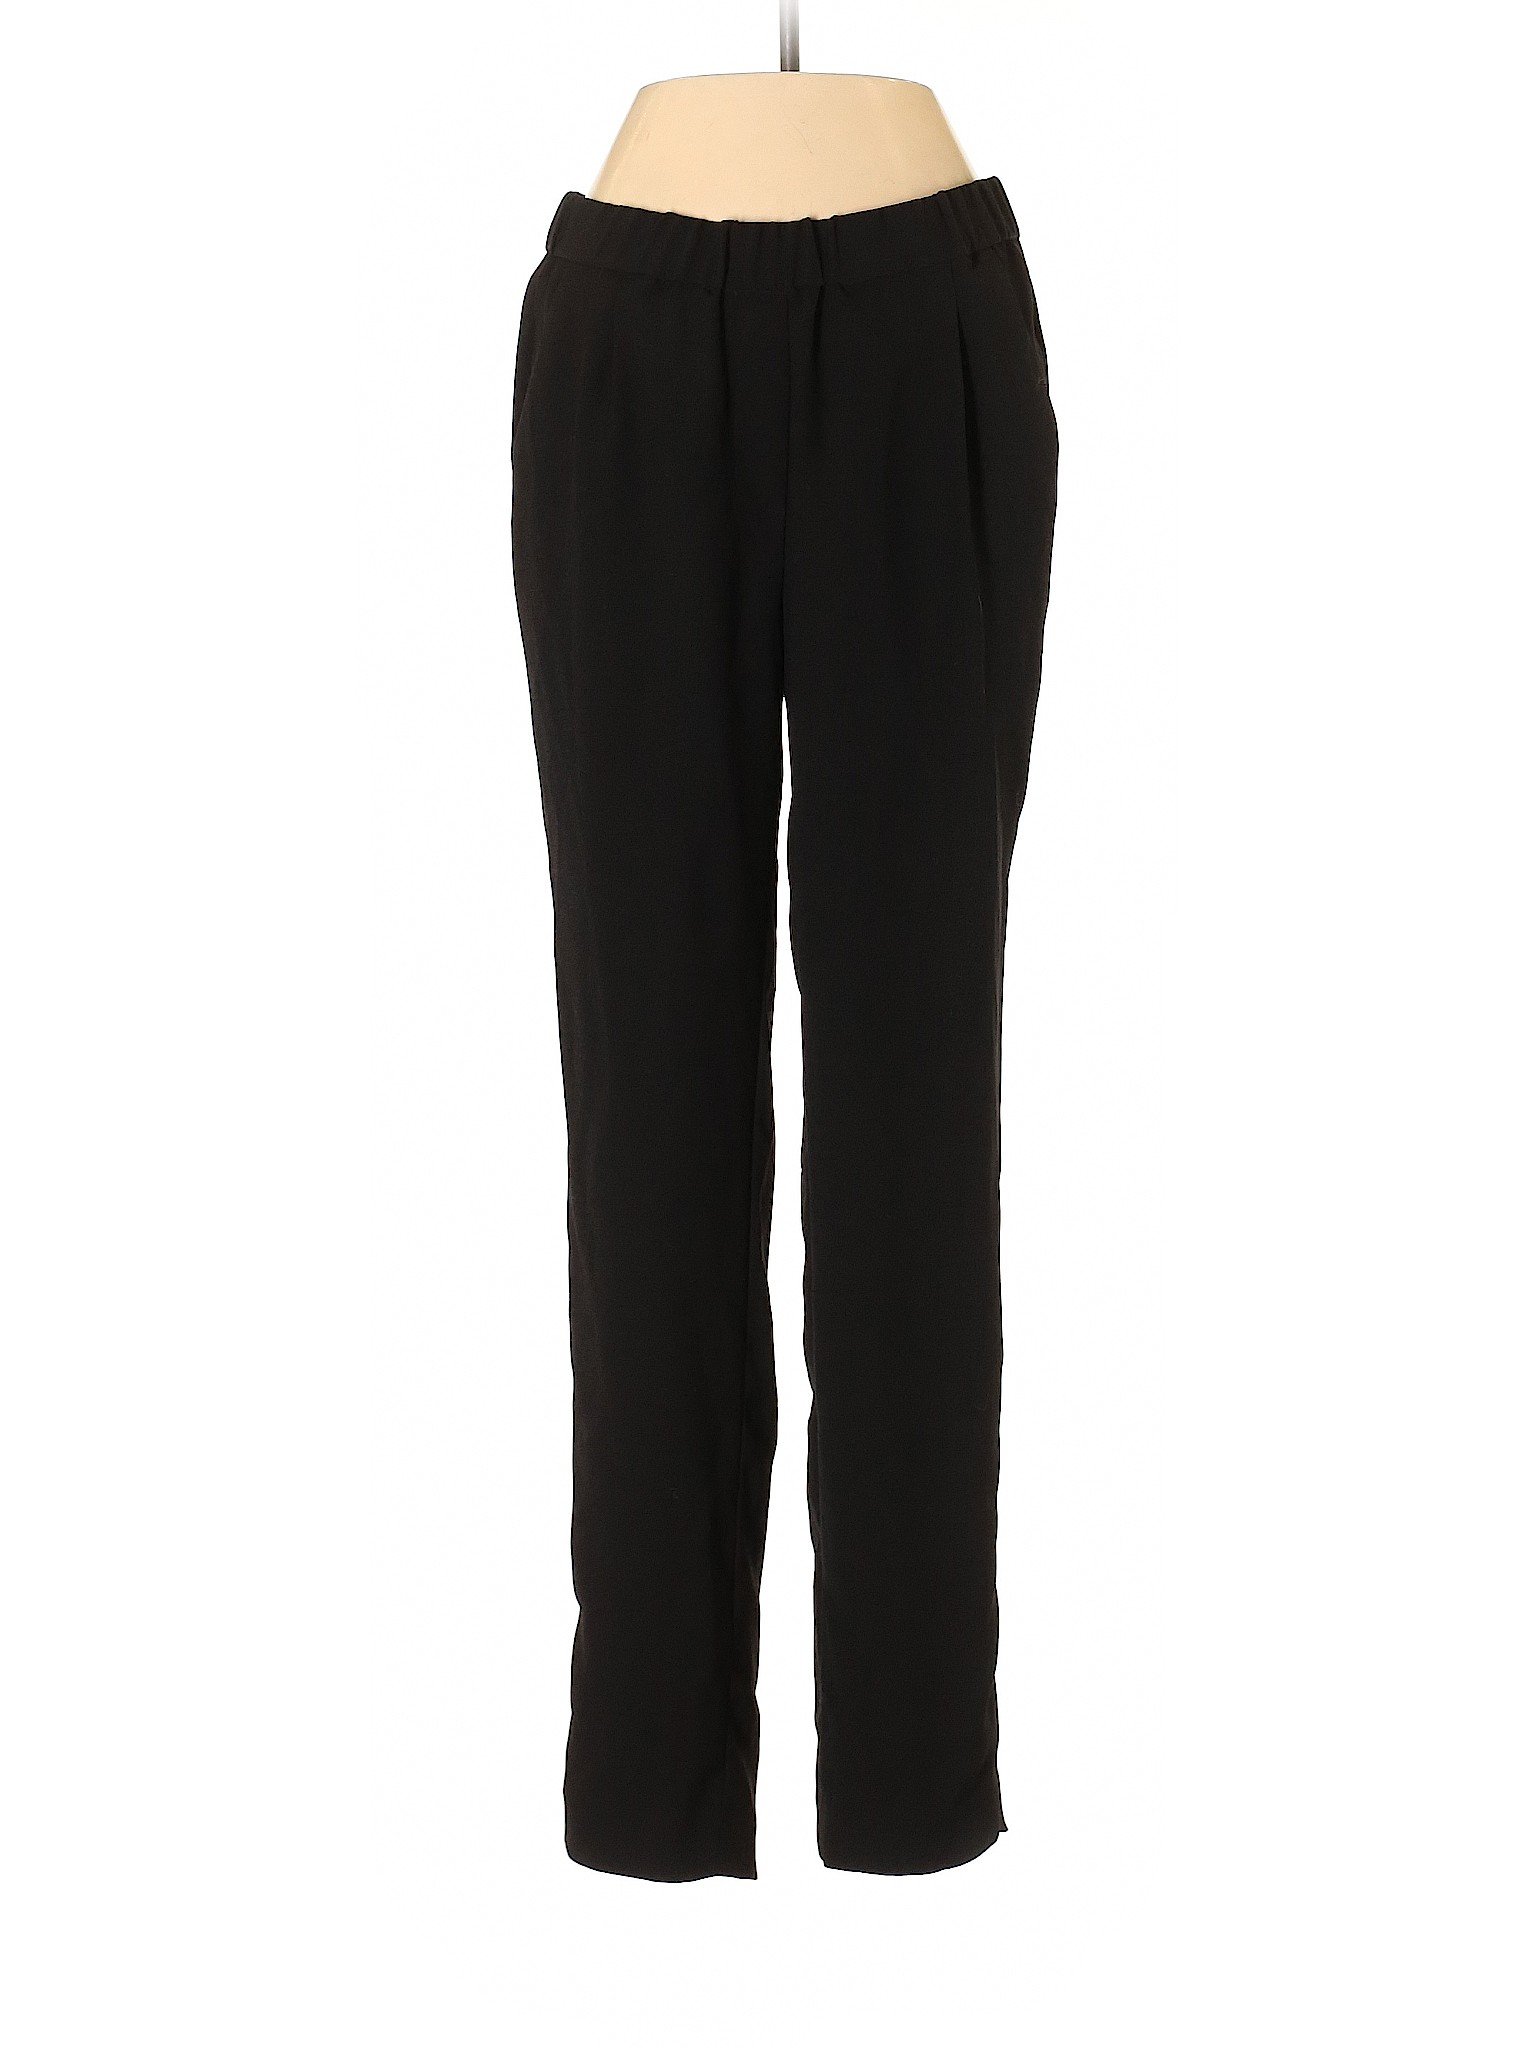 Vince Camuto Women Black Dress Pants XS | eBay